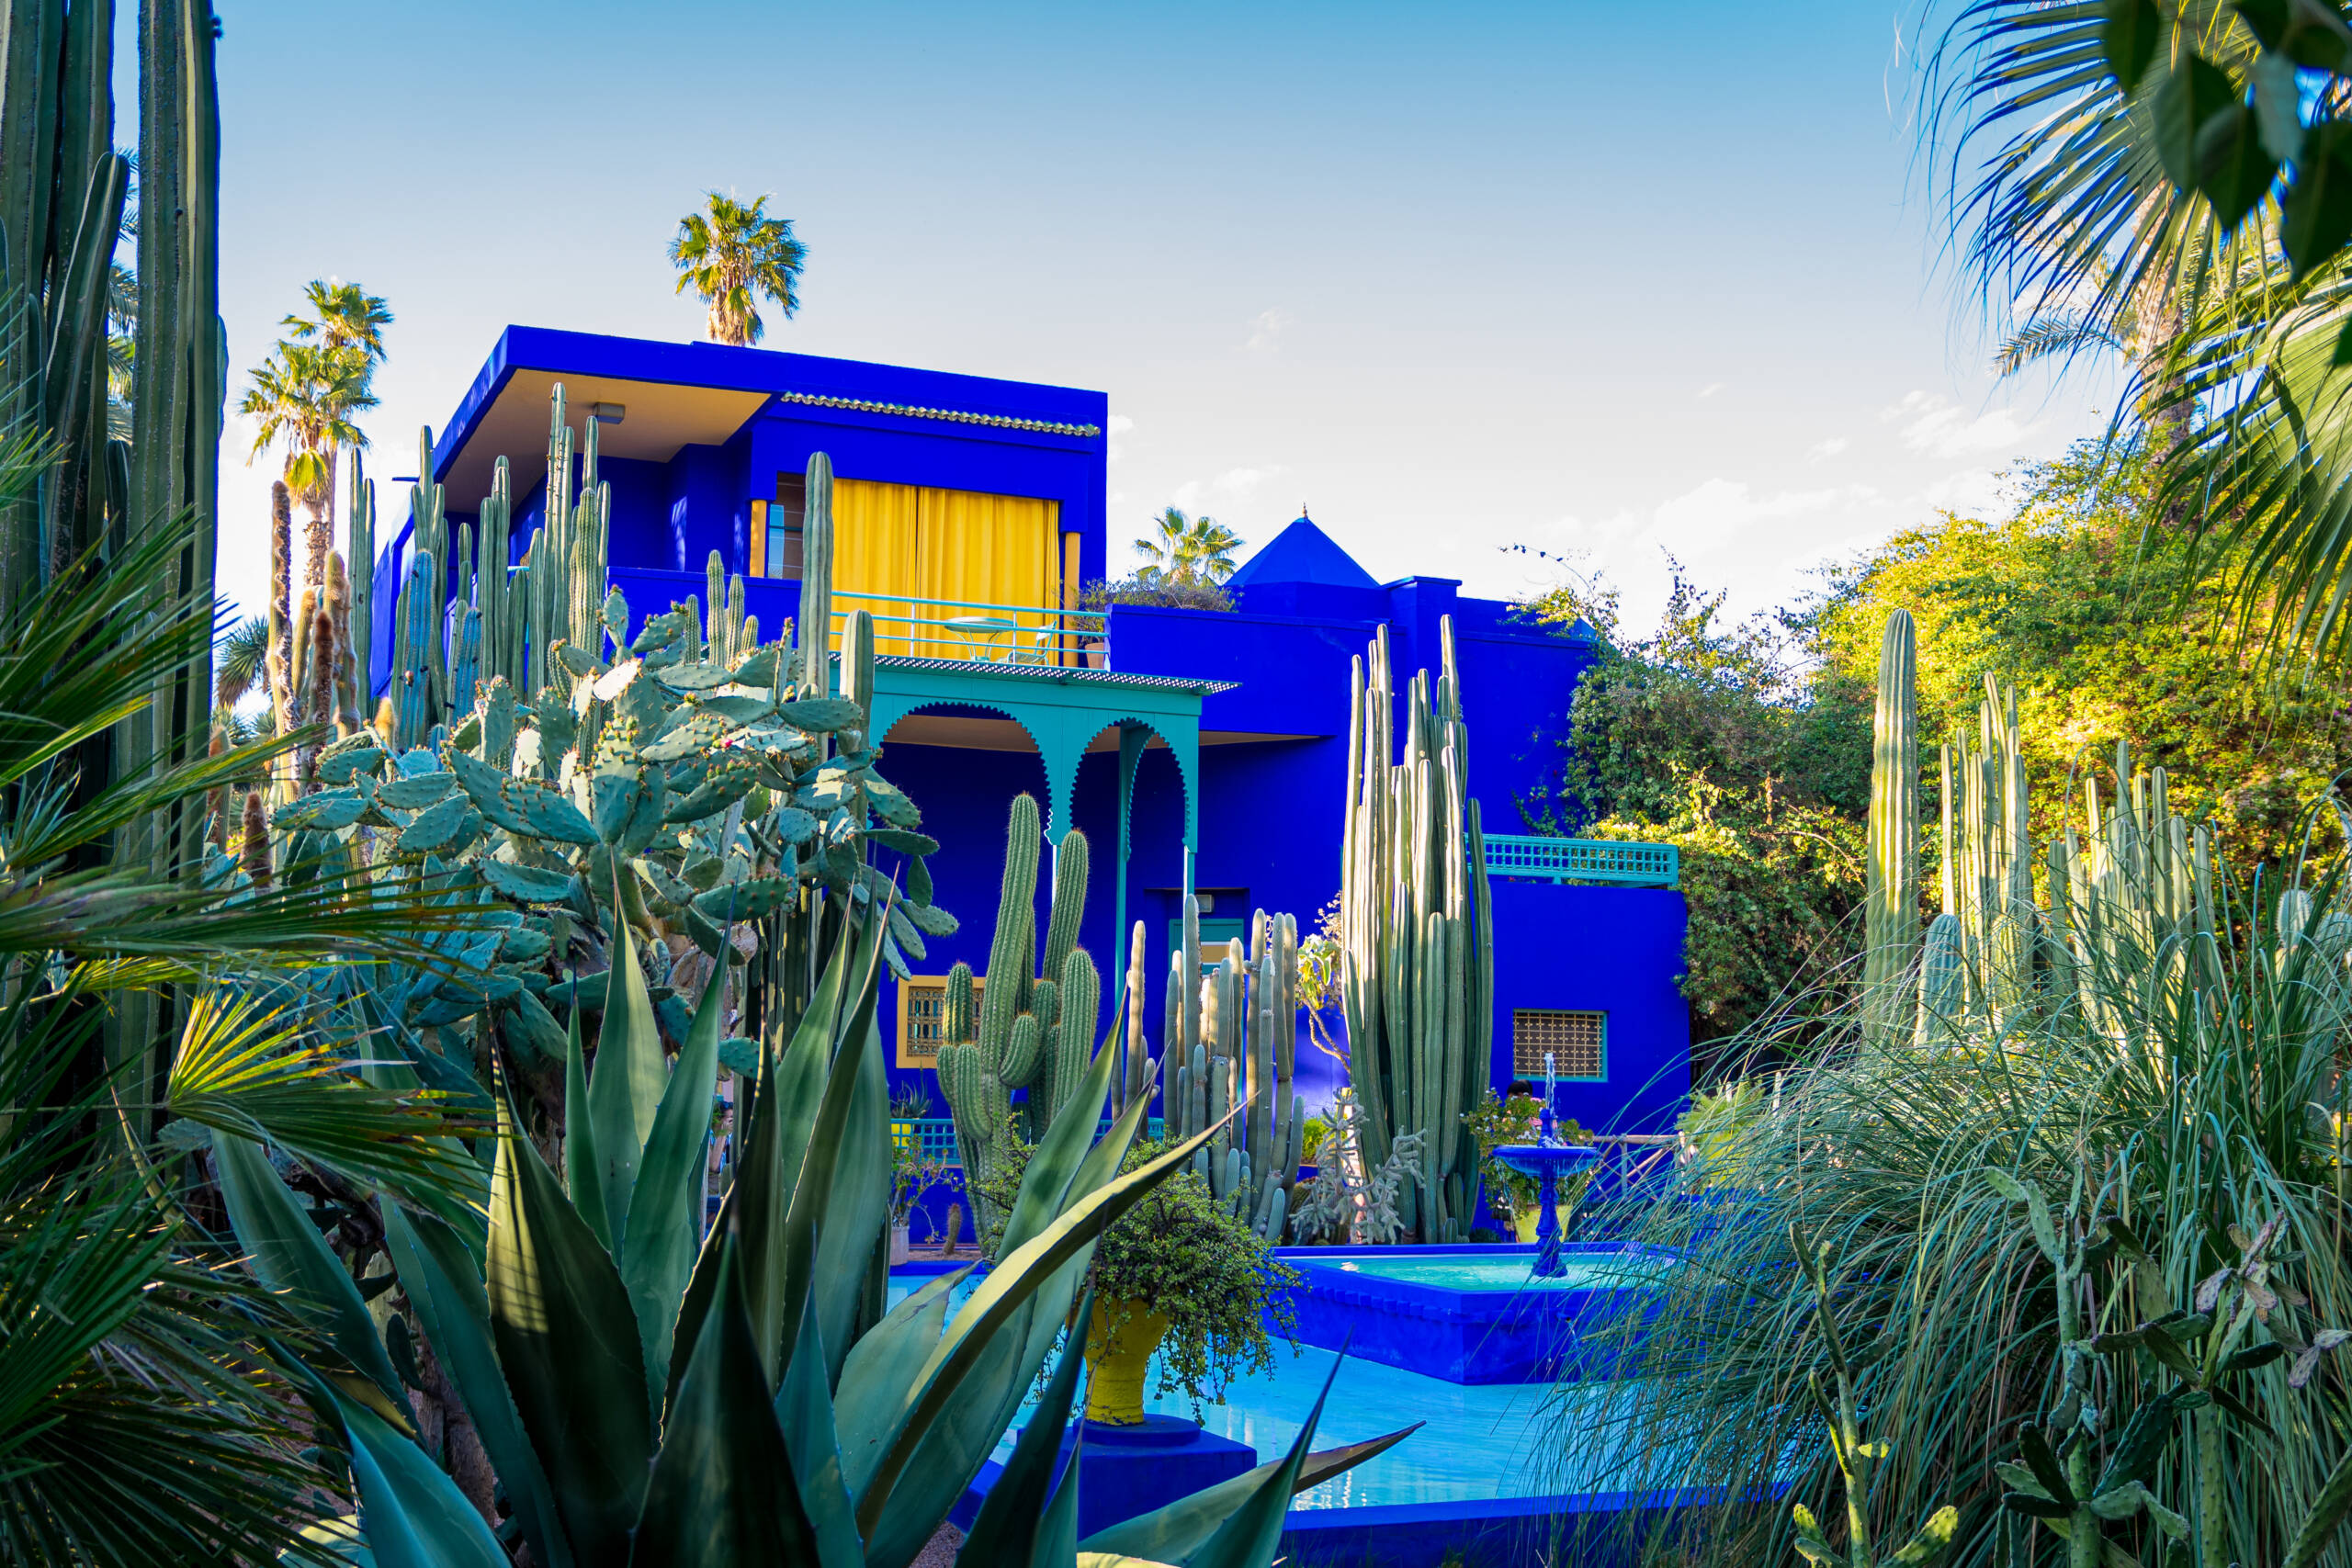 Vivid blue building and garden of captus and exotic plants. Majorelle Garden. Concept of travel and architecture. Marrakech, Morocco